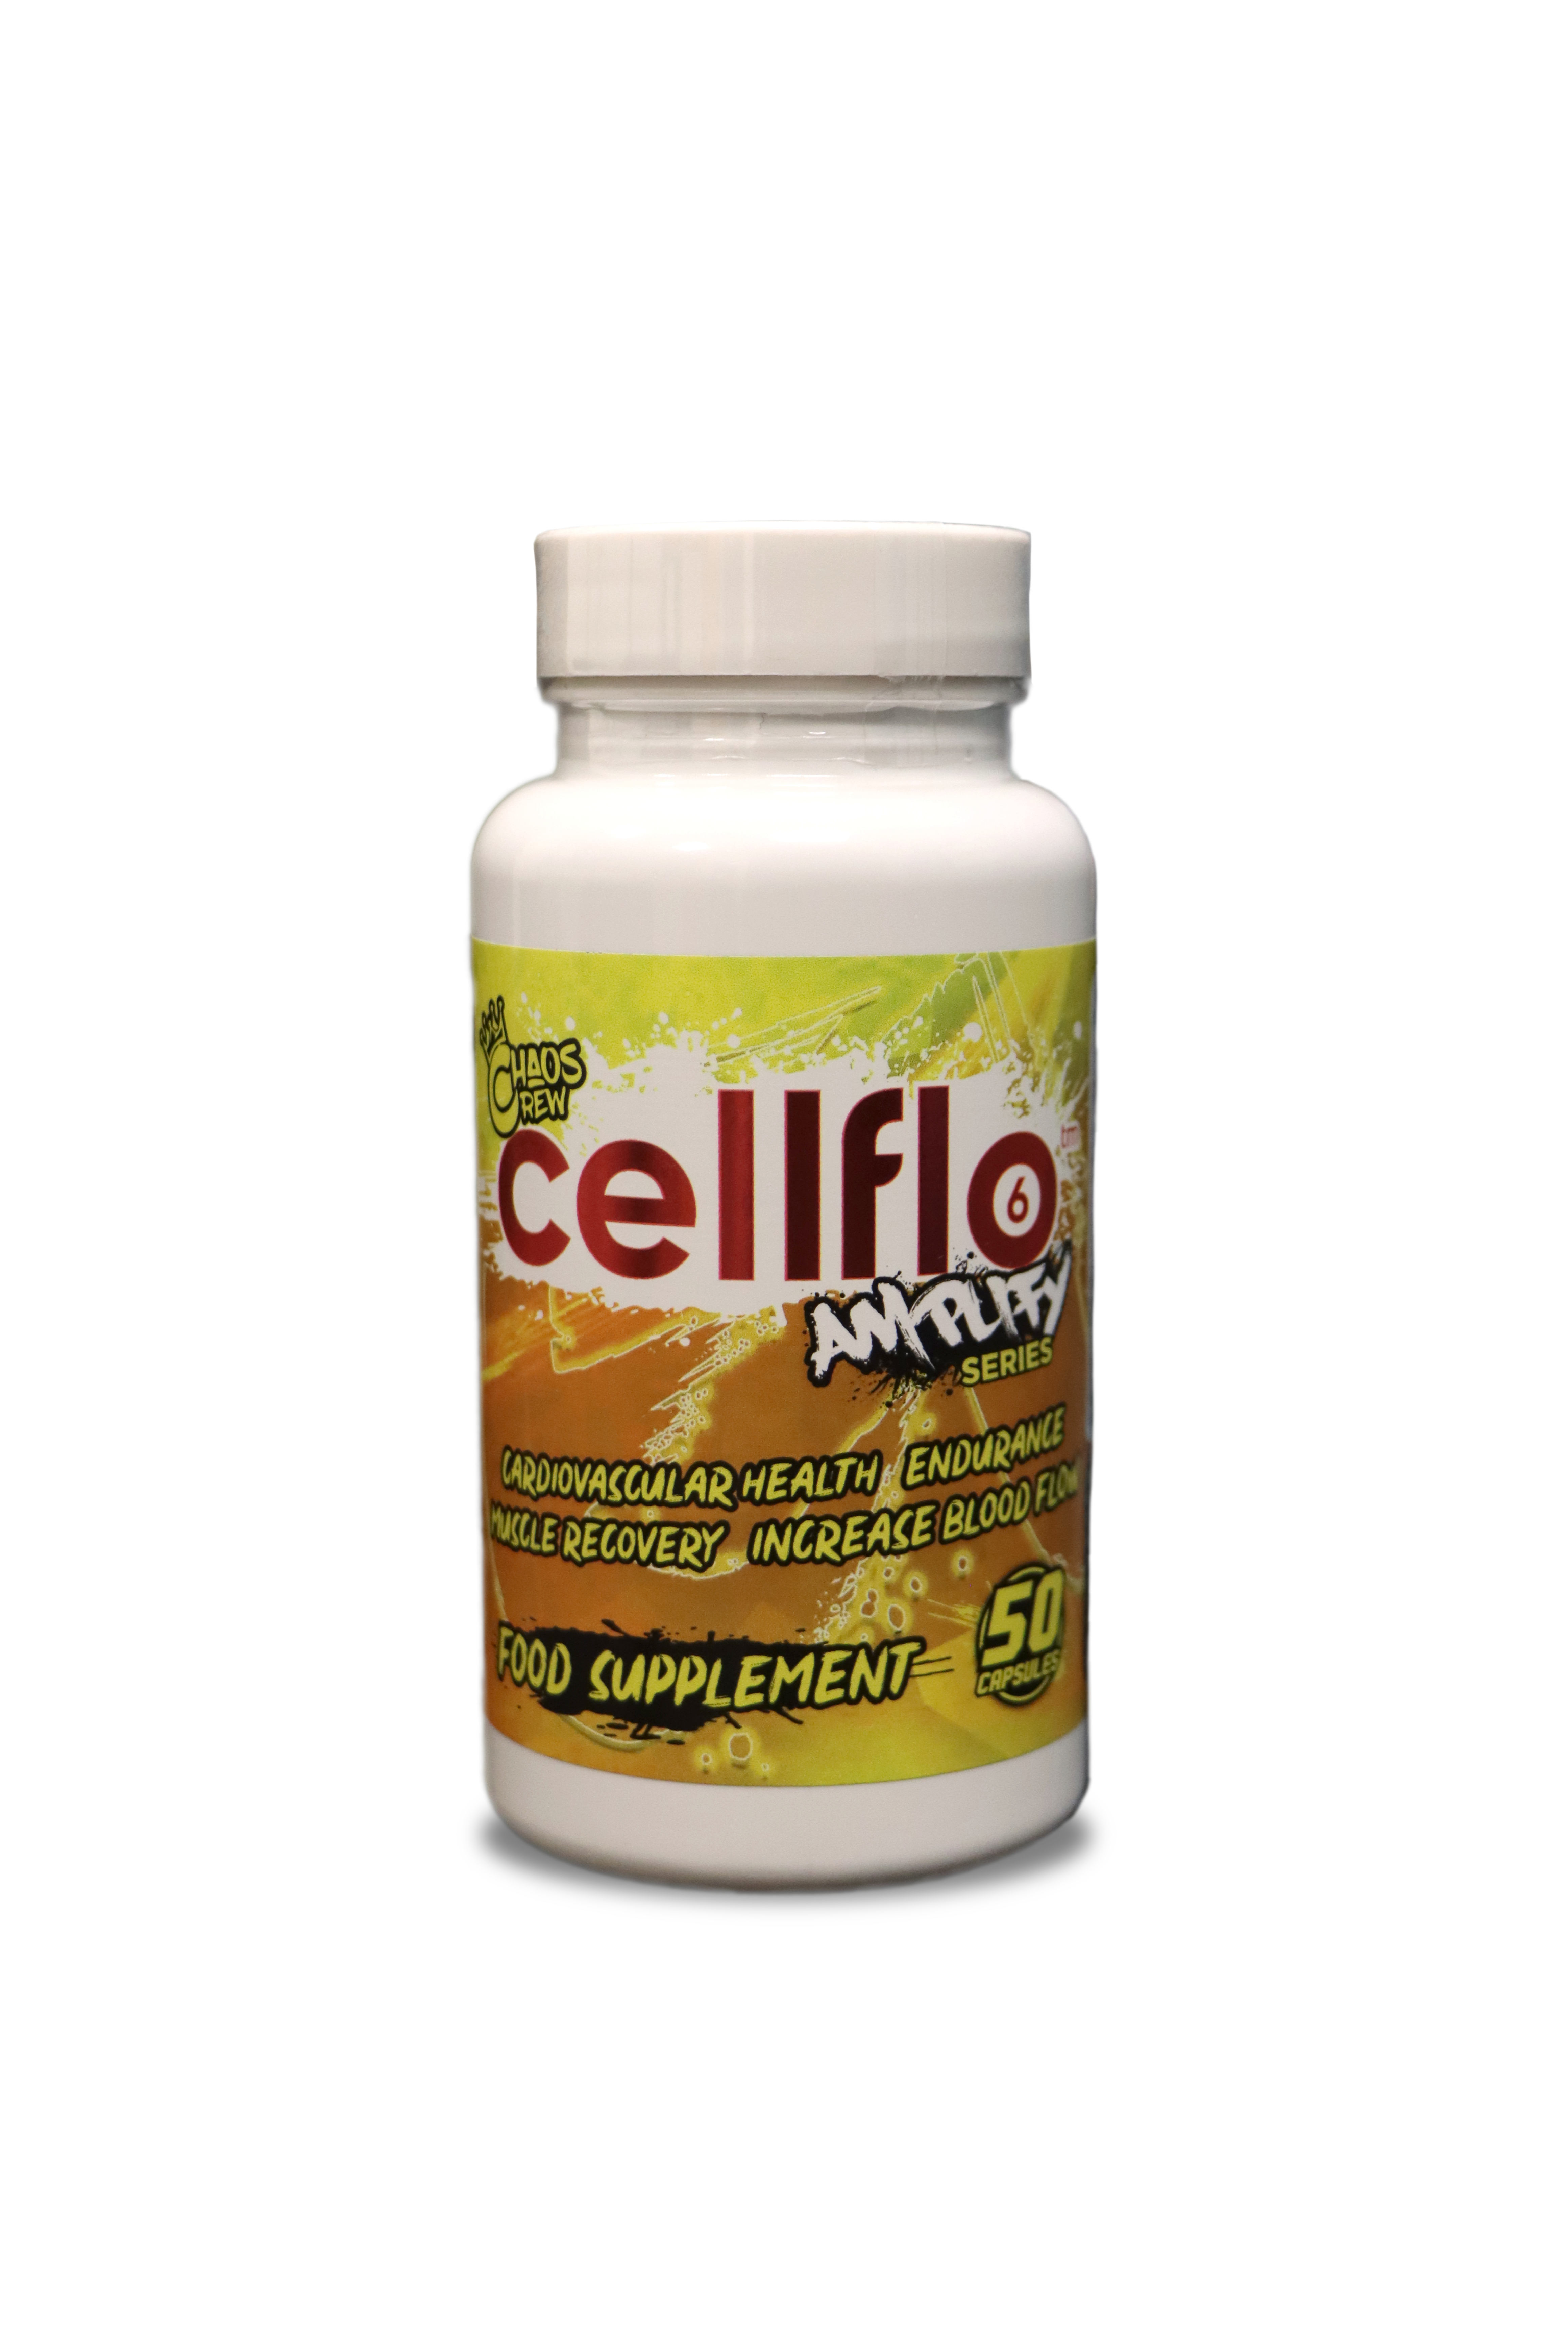 CellFlo6 Amplify Series